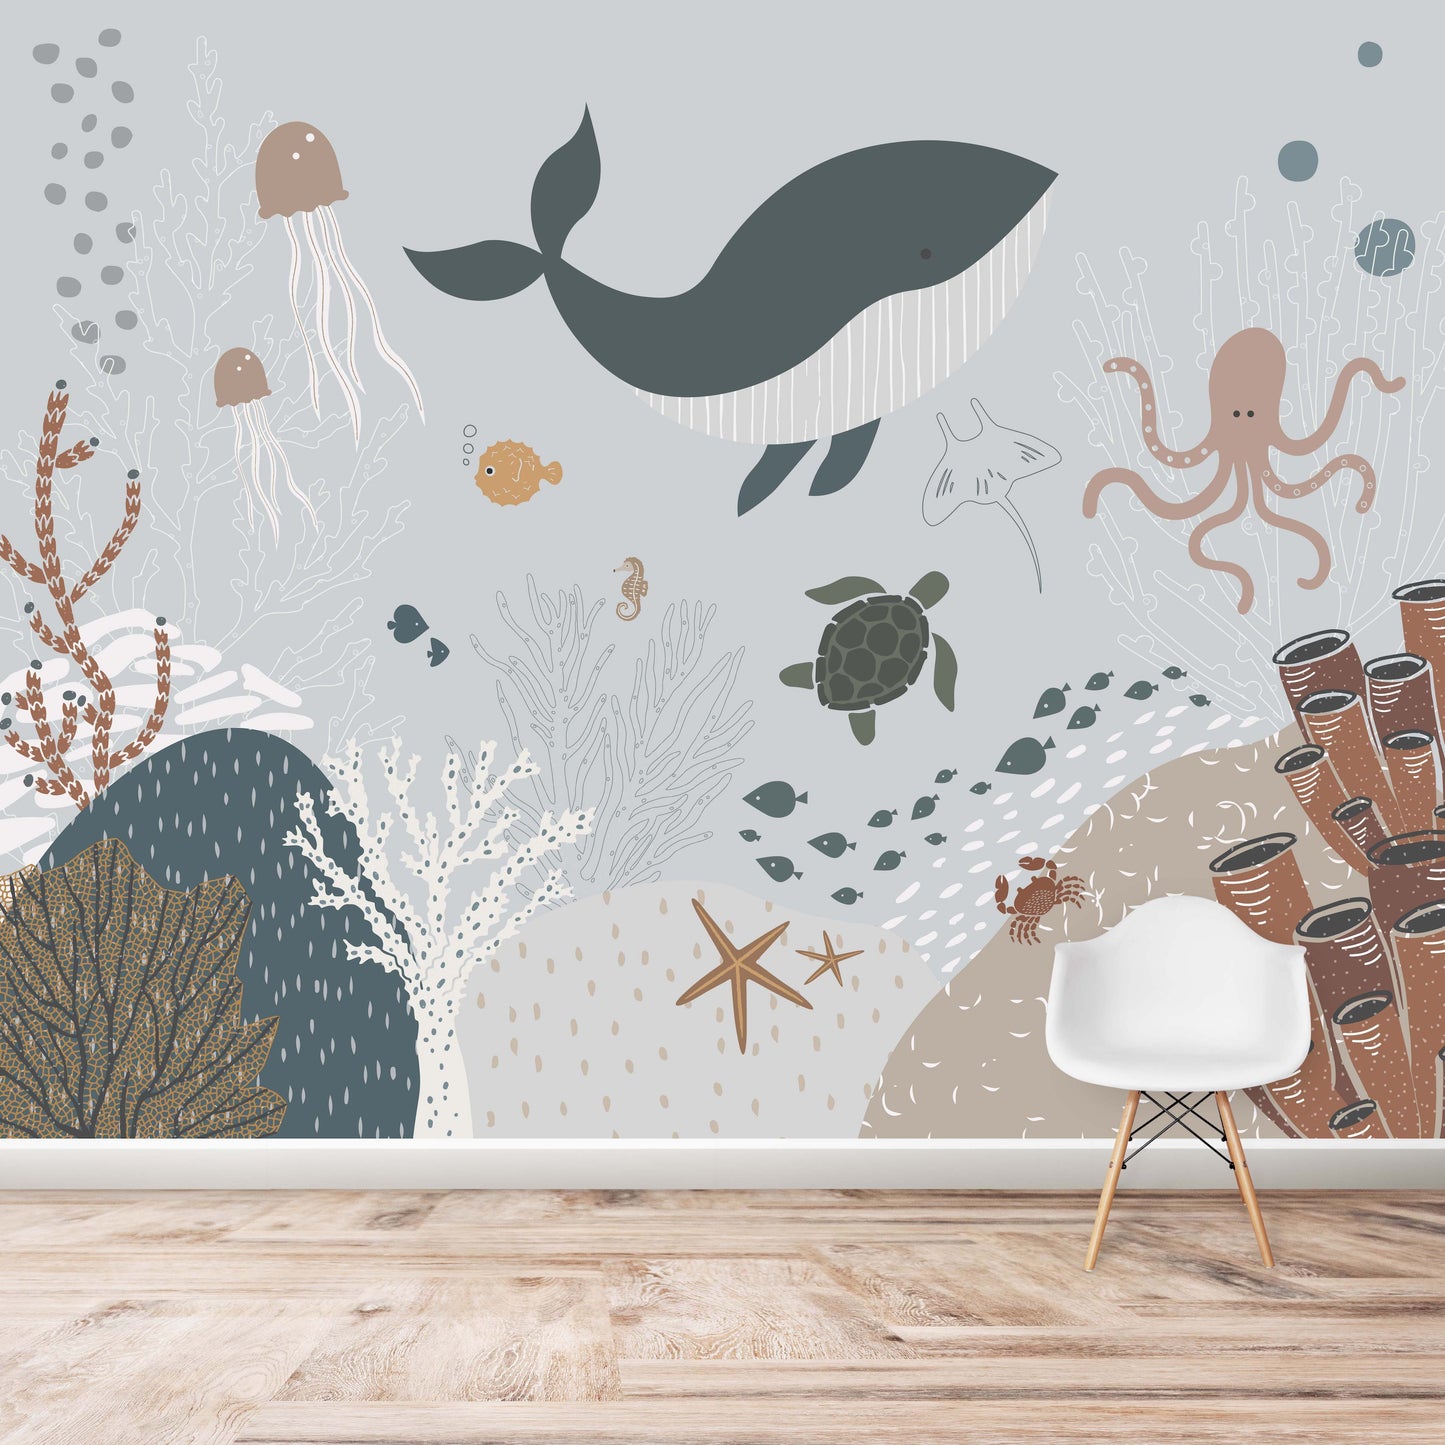 Under The Sea Wallpaper Mural - Munks and Me Wallpaper